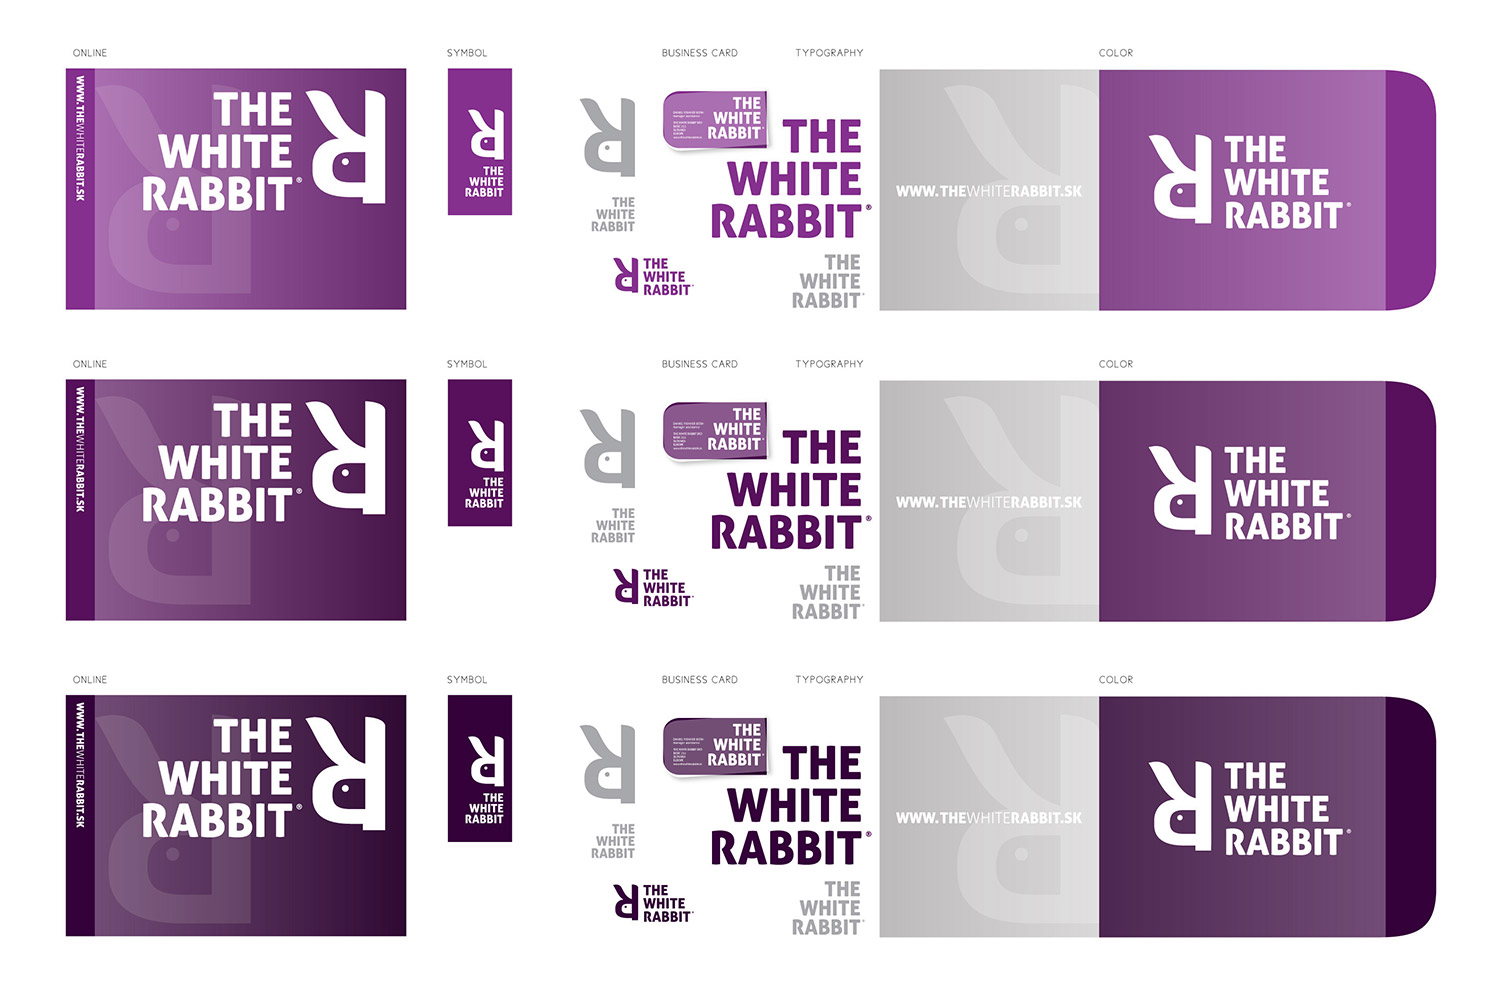 White Rabbit, corporate identity image